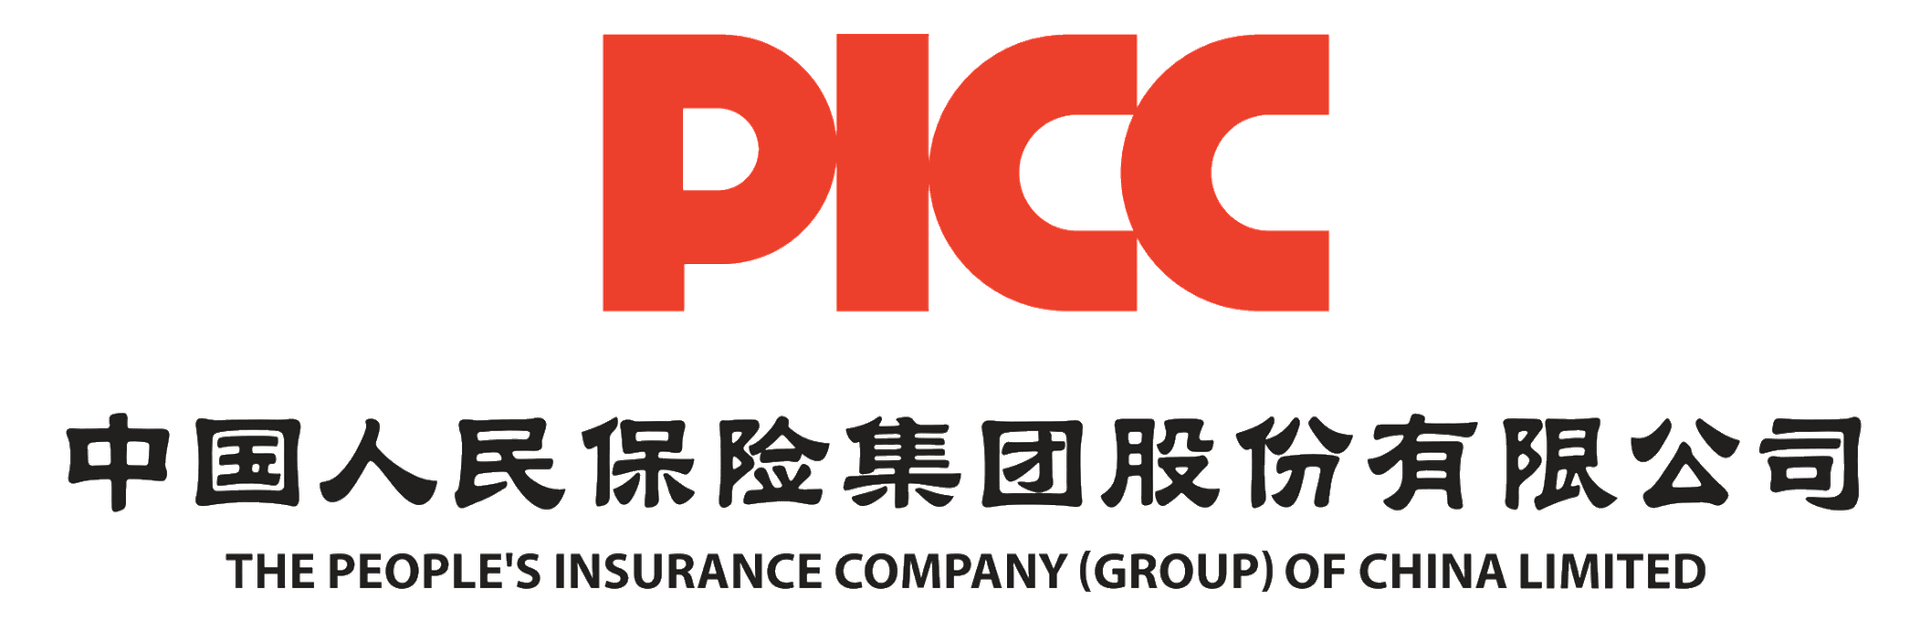 marketing strategy of PICC - logo